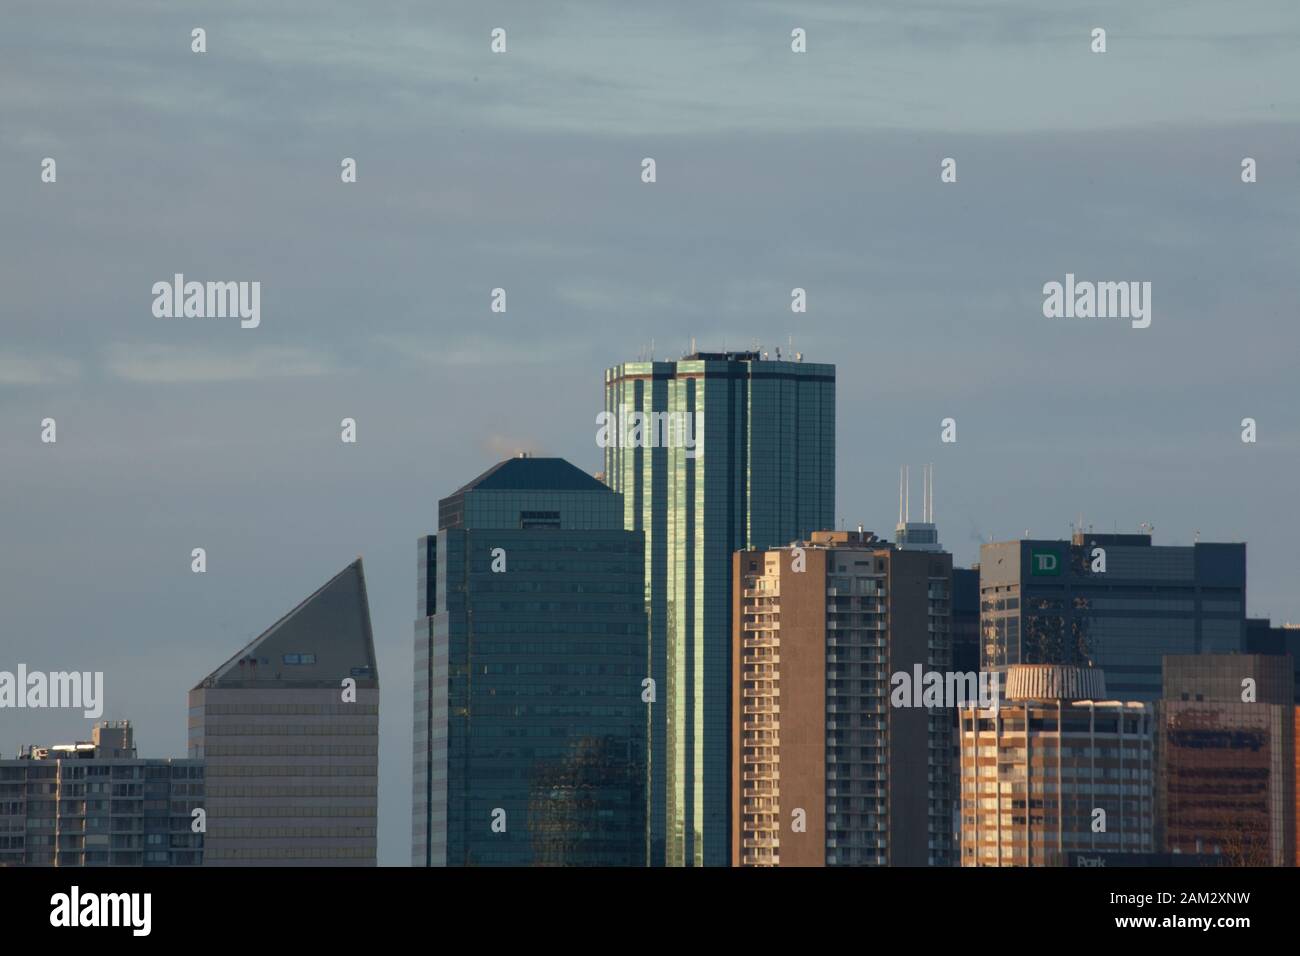 Skyline of skyscrapers and modern office buildings against overcast sky, Edmonton, Alberta, Canada Stock Photo